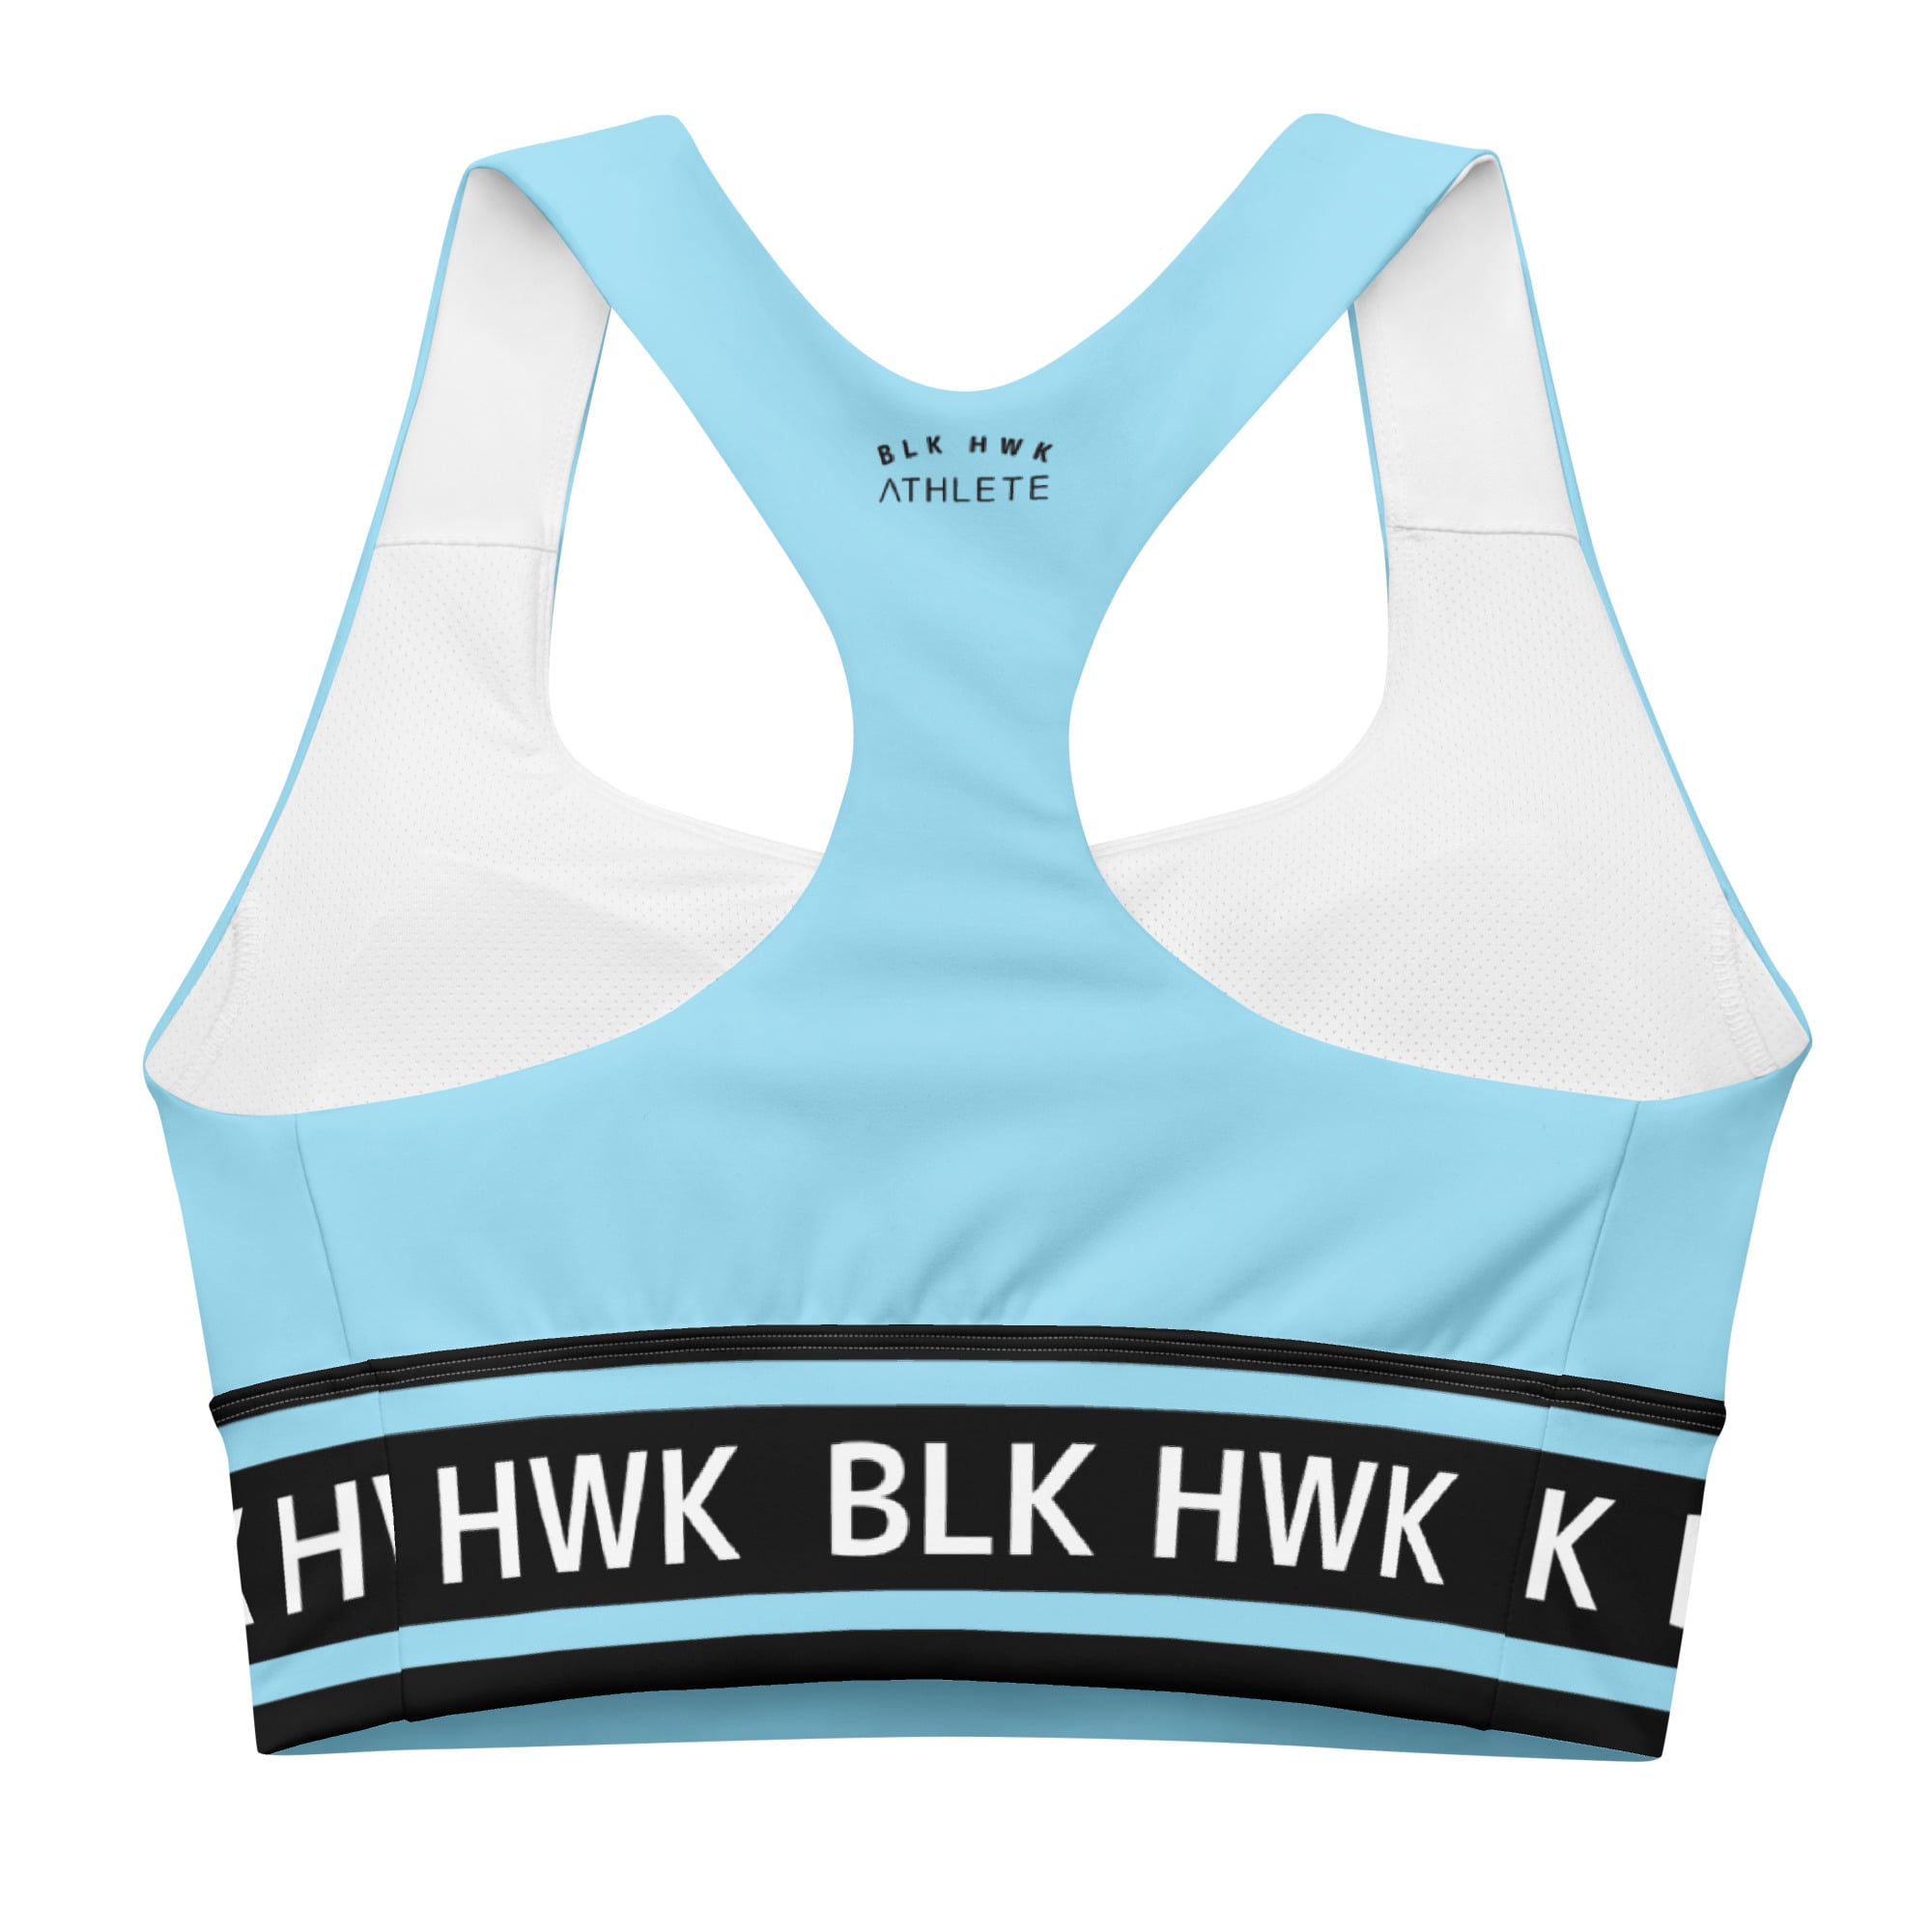 black hawk athlete bra columbia blue back 635316937003c min